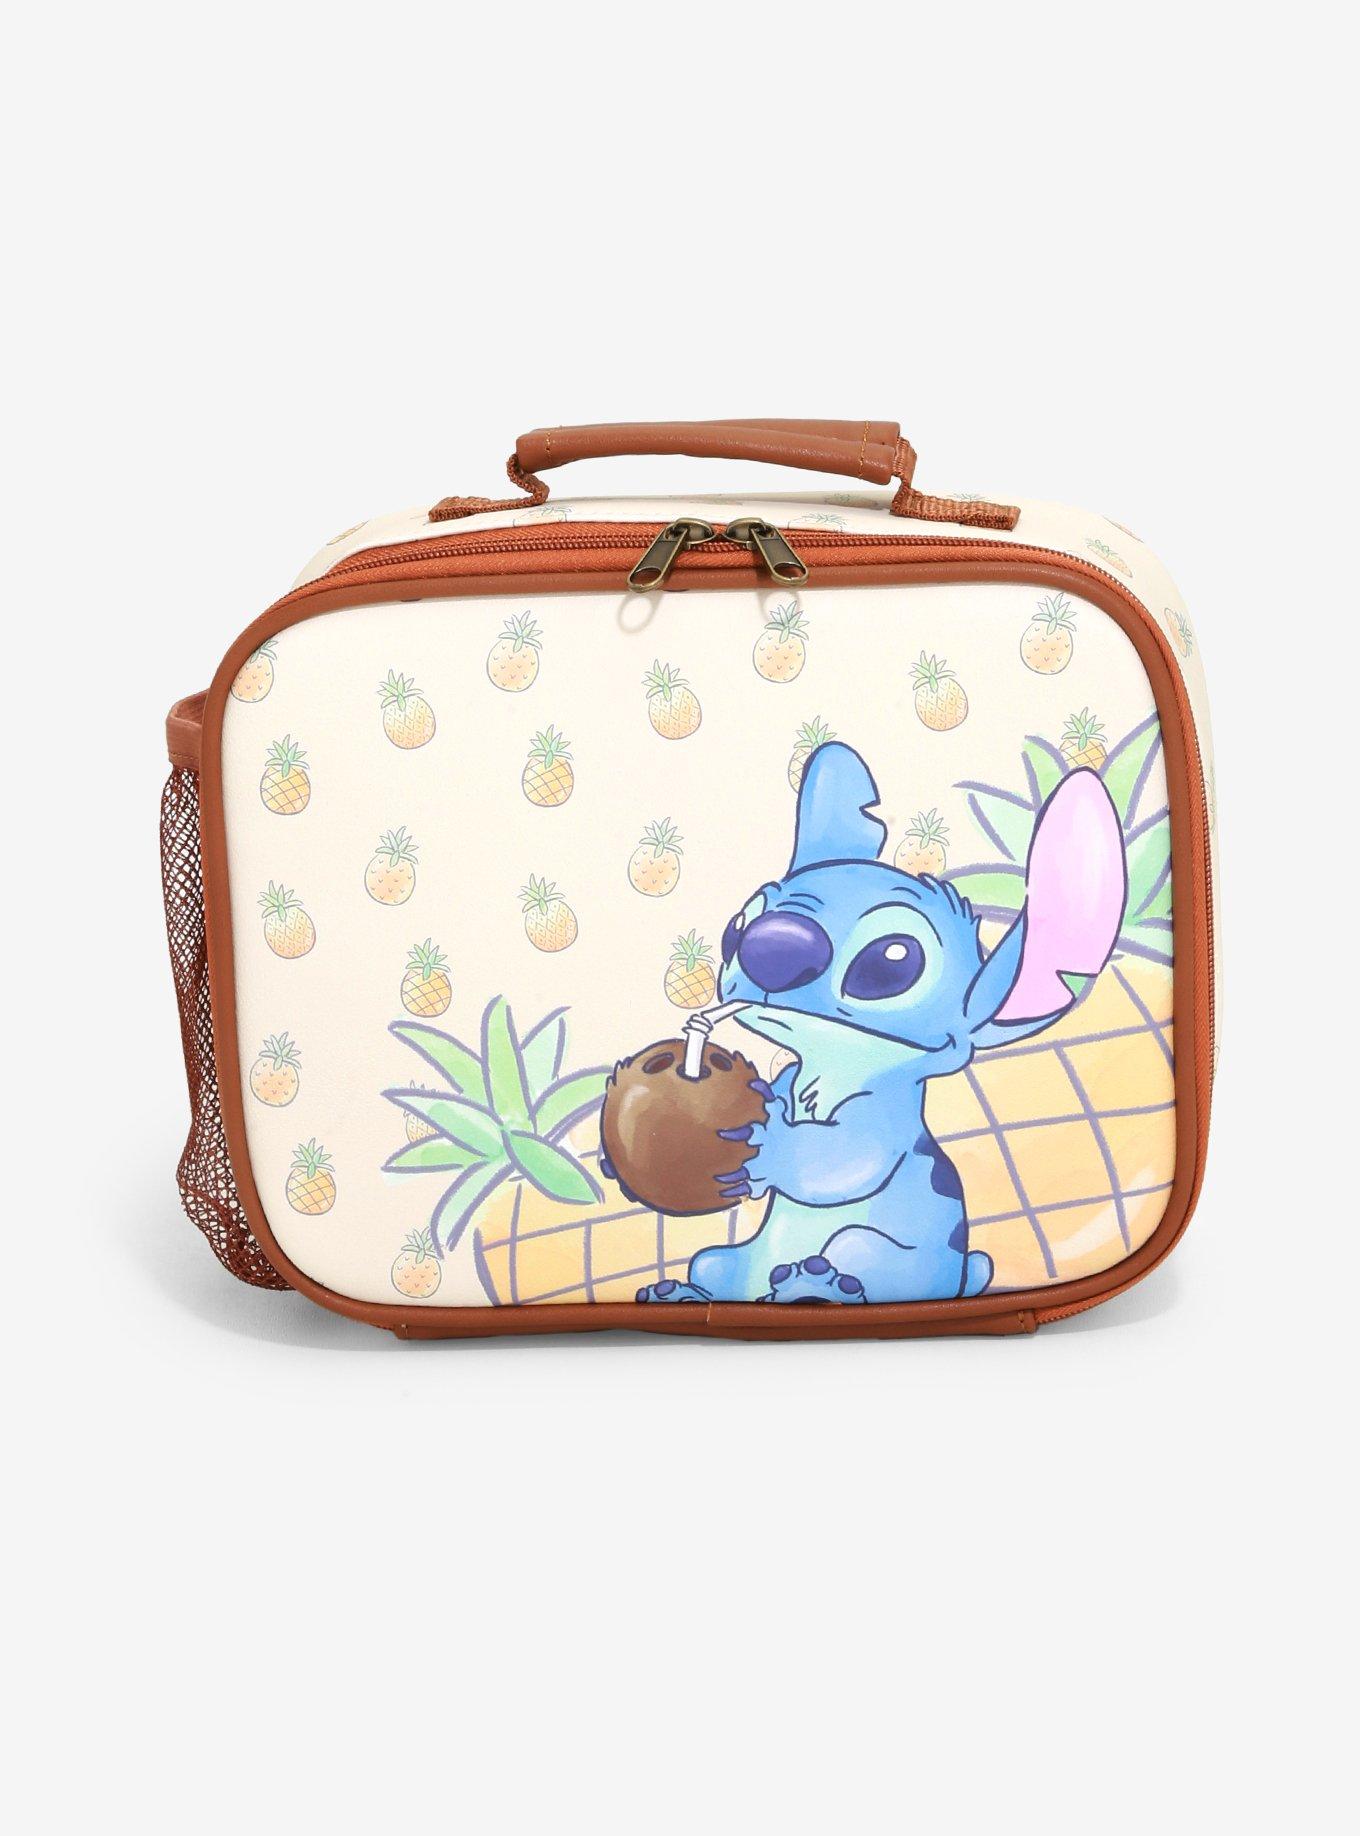 Lilo & Stitch Lunch Box - Bundle with Lilo & Stitch Lunch Bag, Water Bottle, Stitch Stickers | Lilo & Stitch Lunch Container